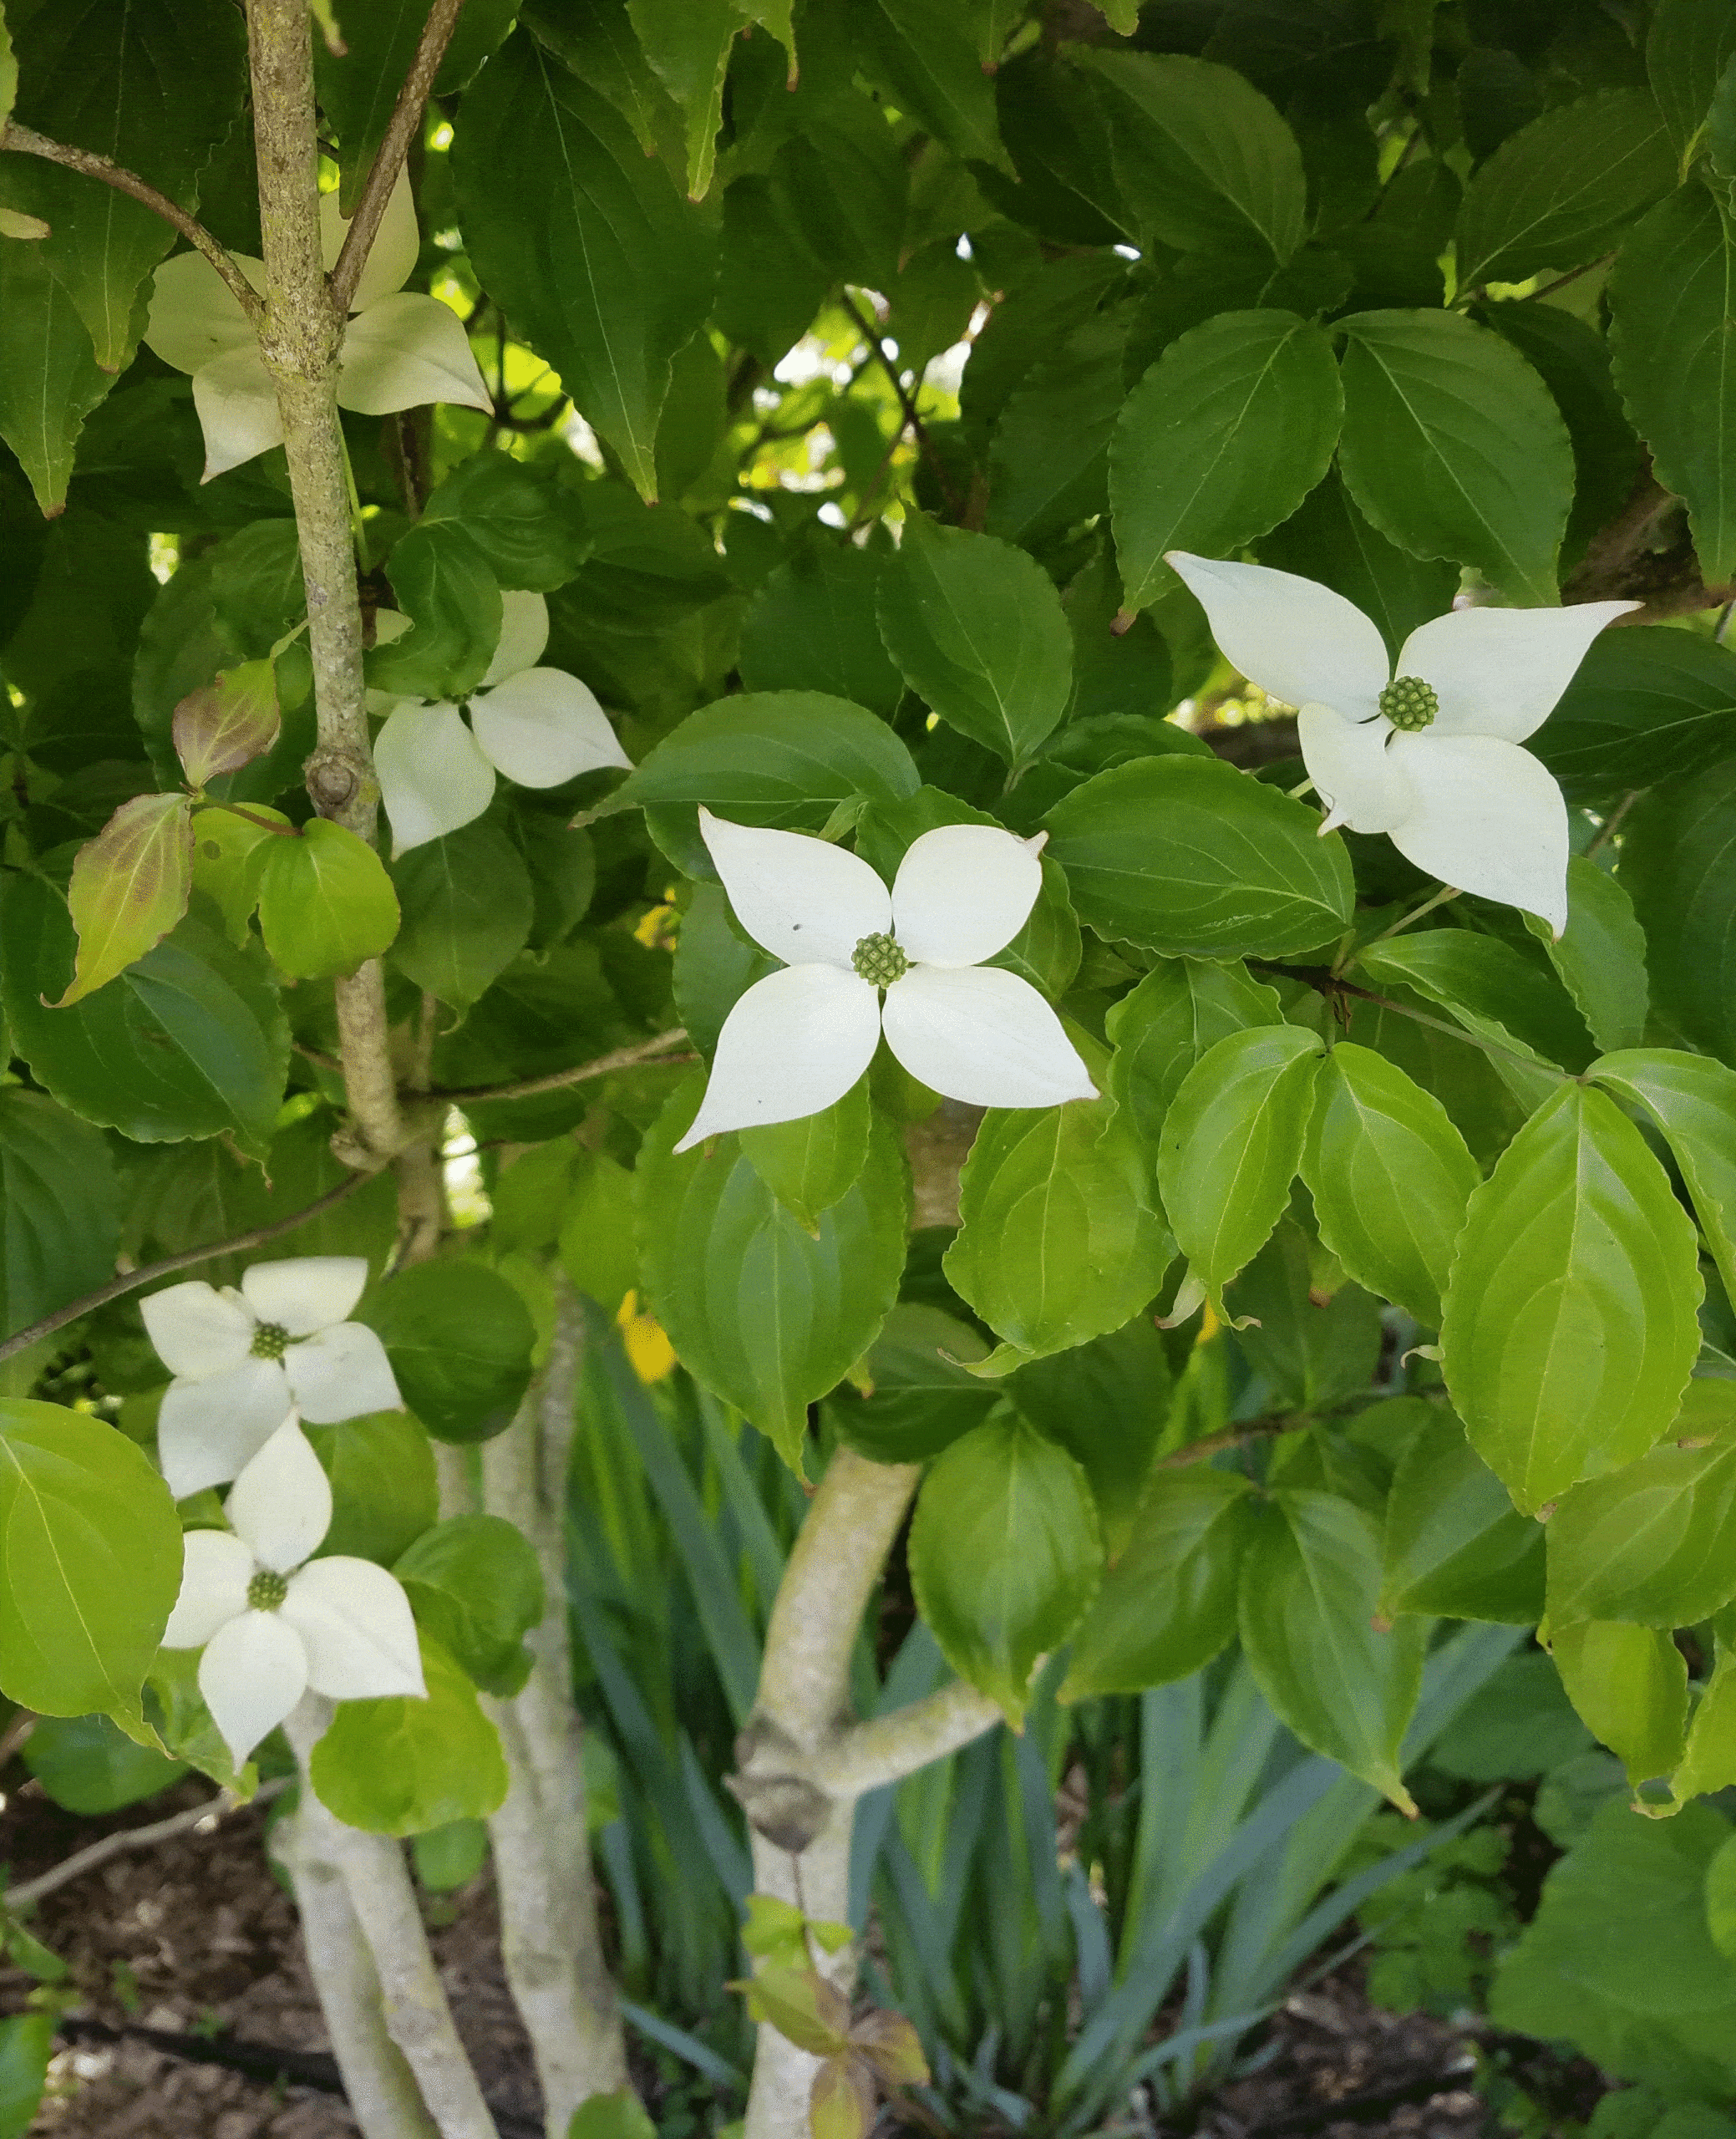 Flowers of Kousa dogwood, a June blooming dogwood.